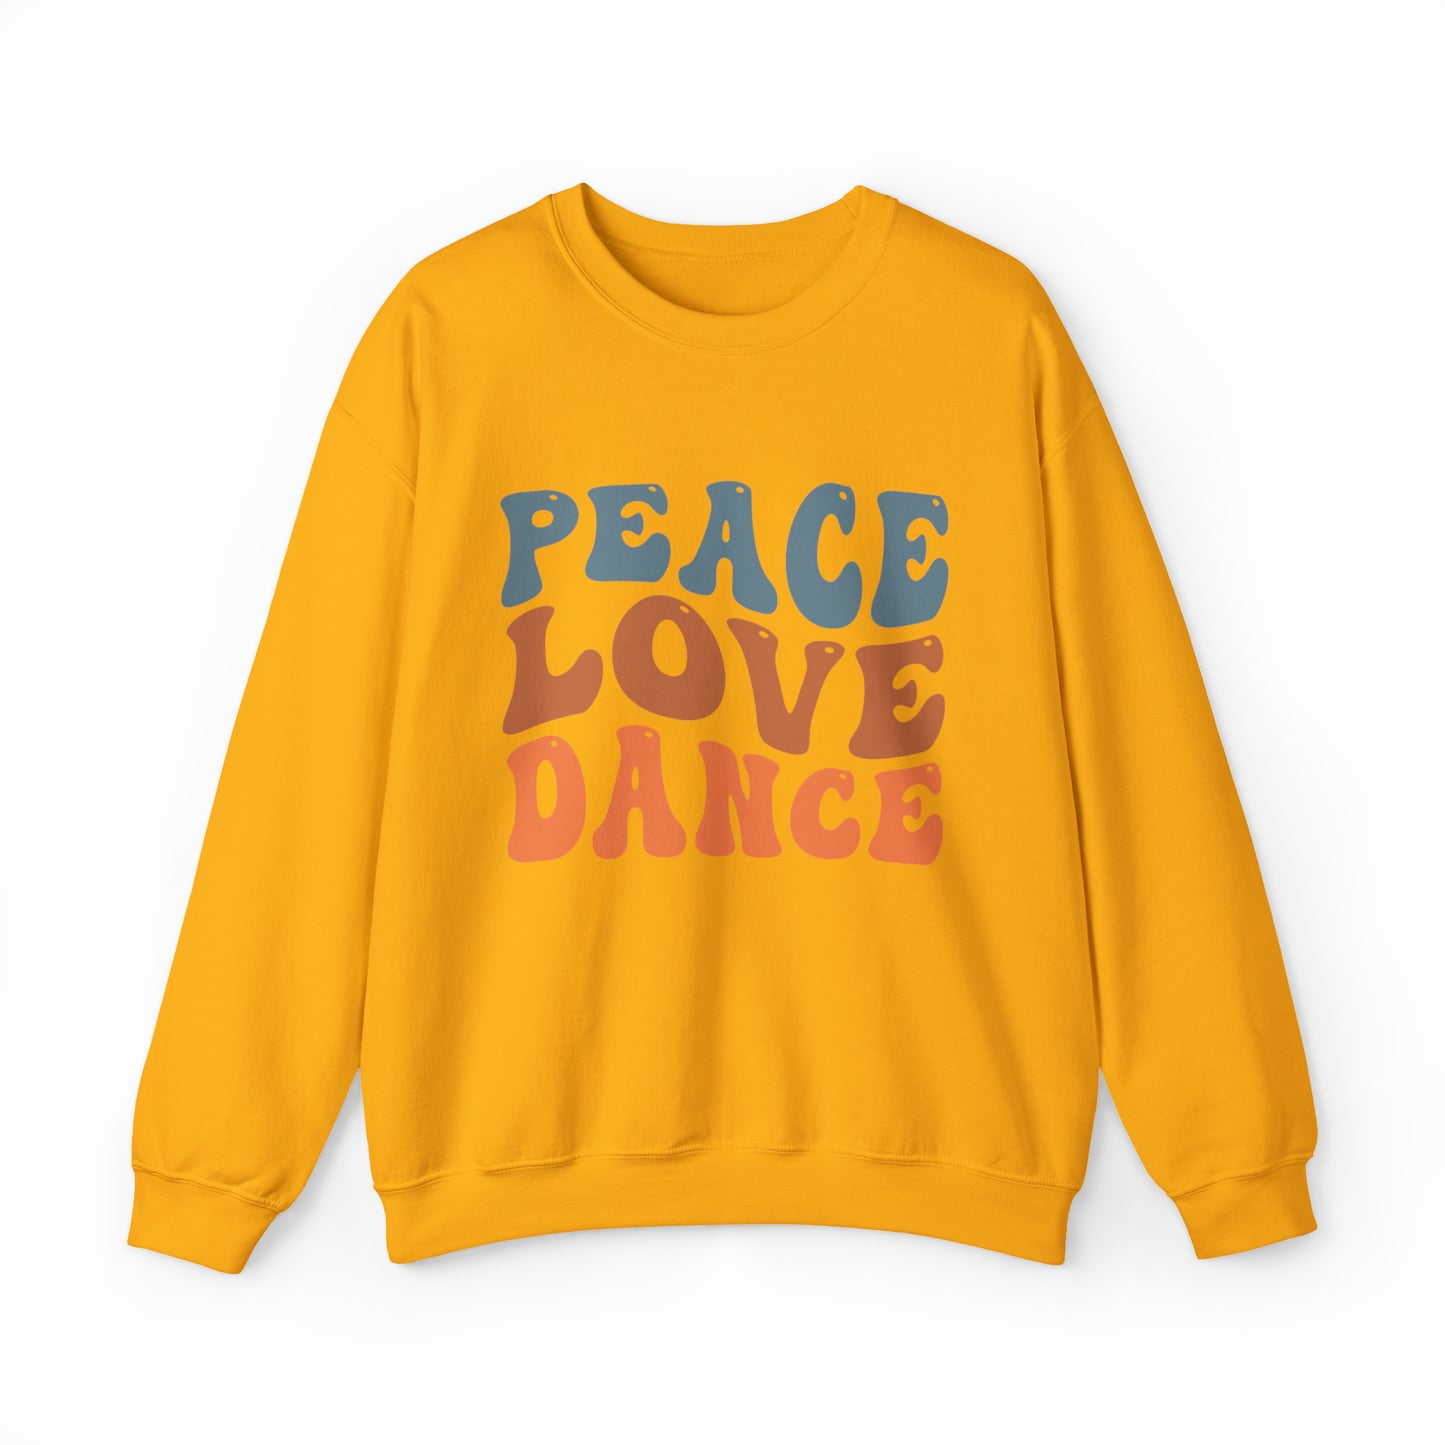 Peace Love Dance Crewneck Sweatshirt